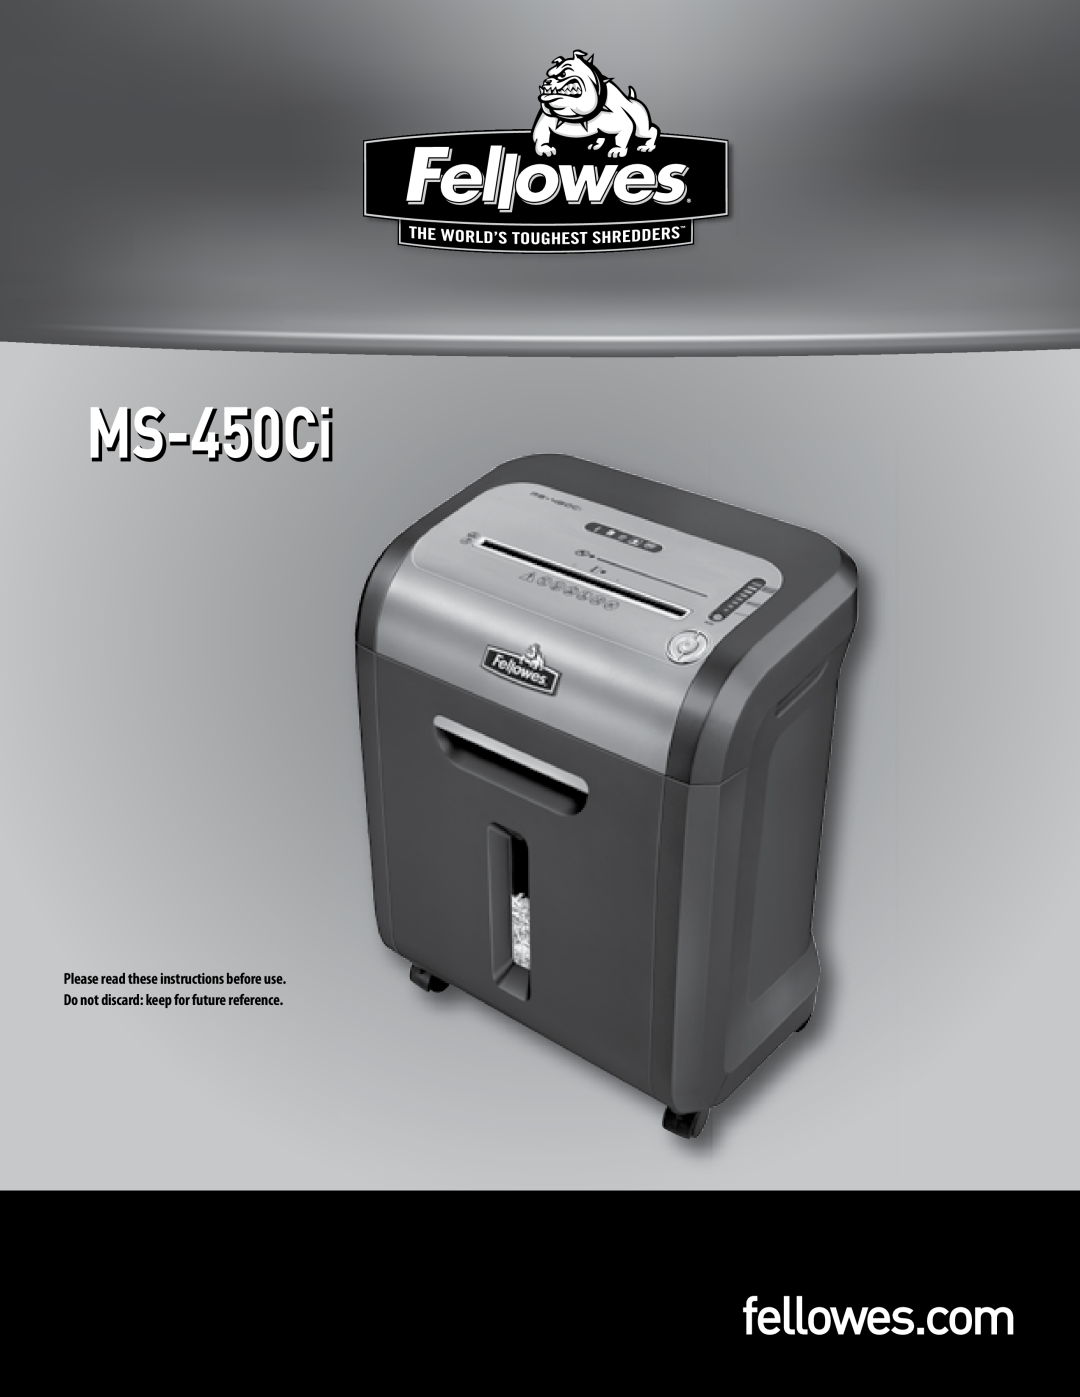 Fellowes MS-460Ci manual MS-450Ci, fellowes.com 